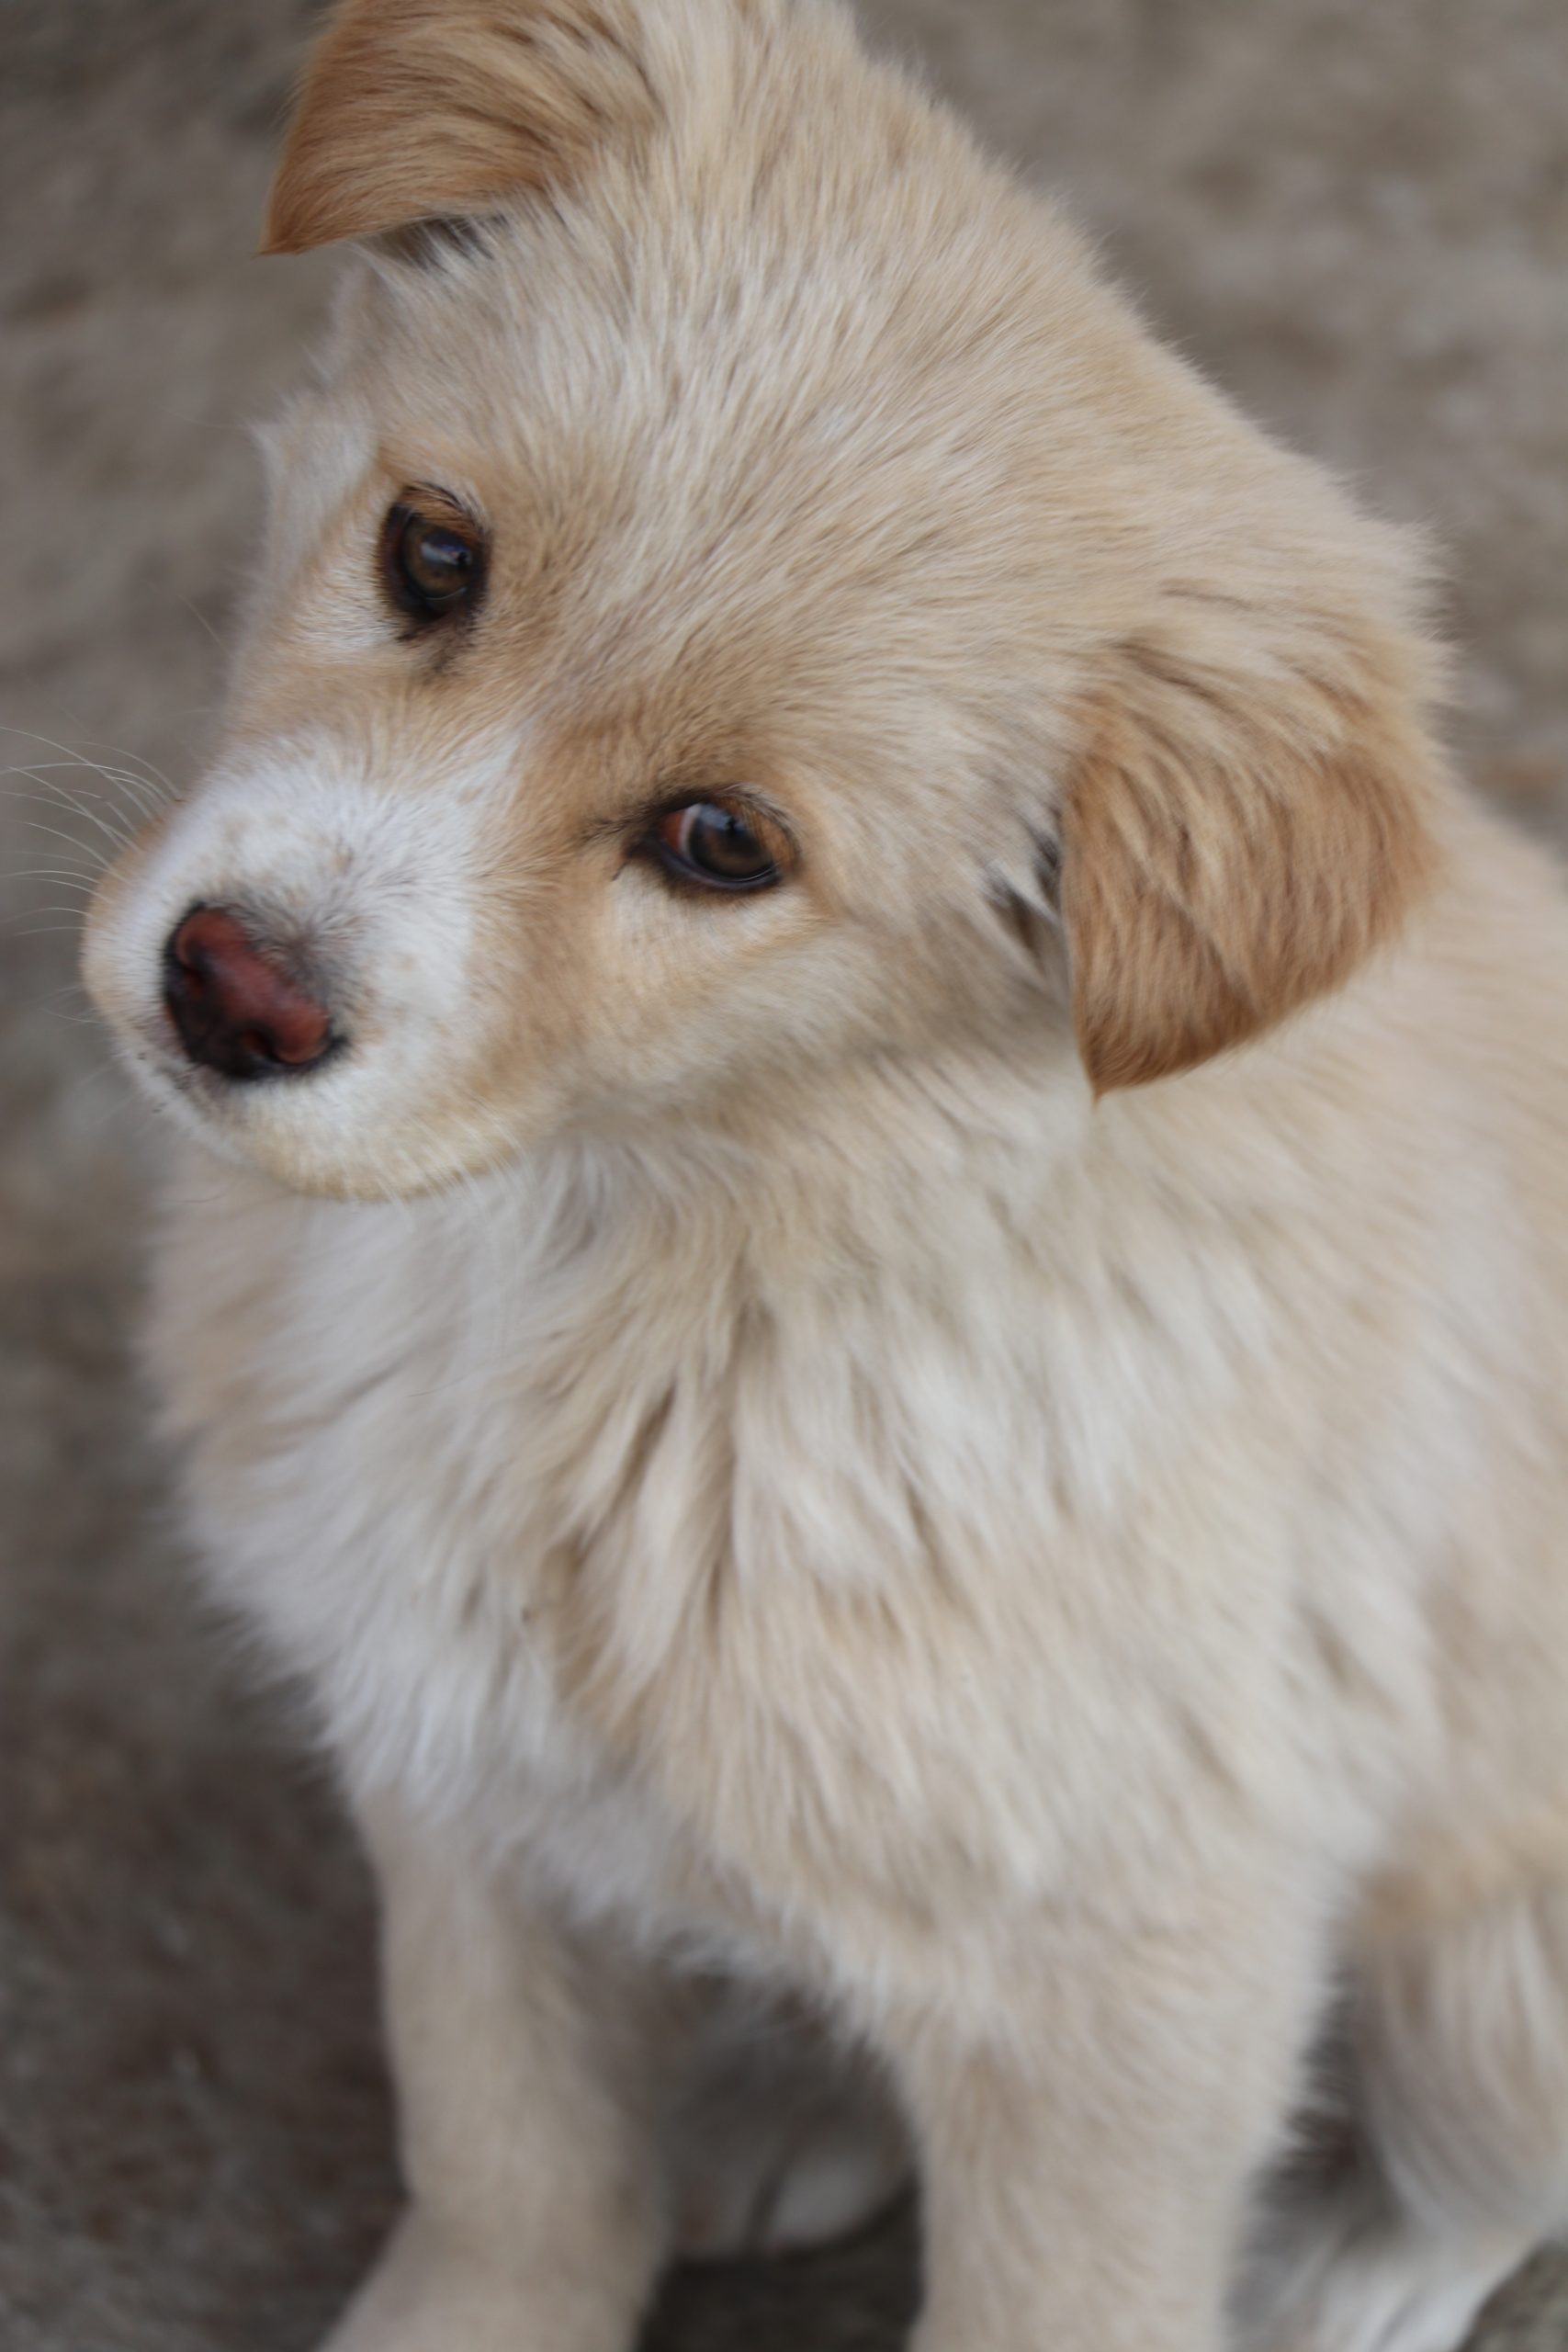 A cute puppy